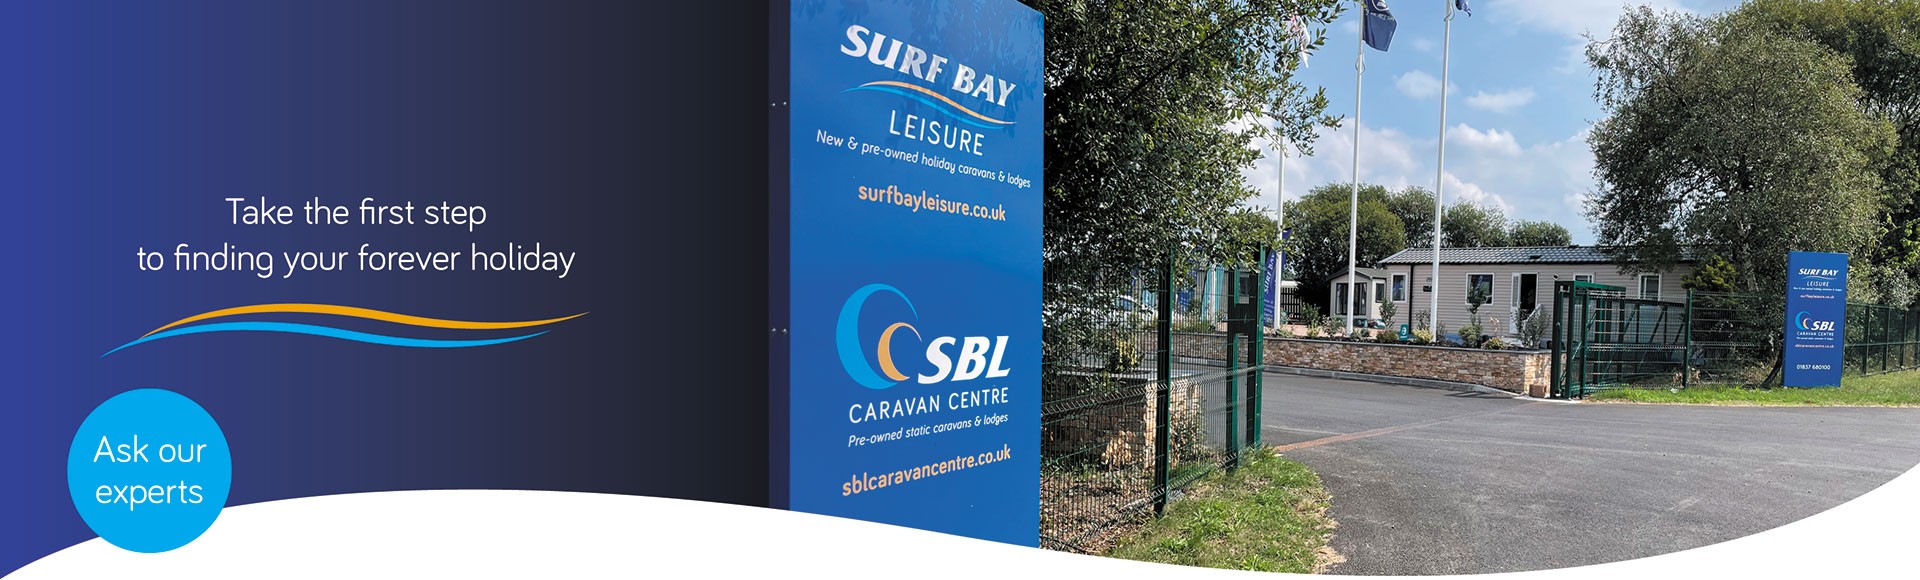 Surf Bay leisure customer care